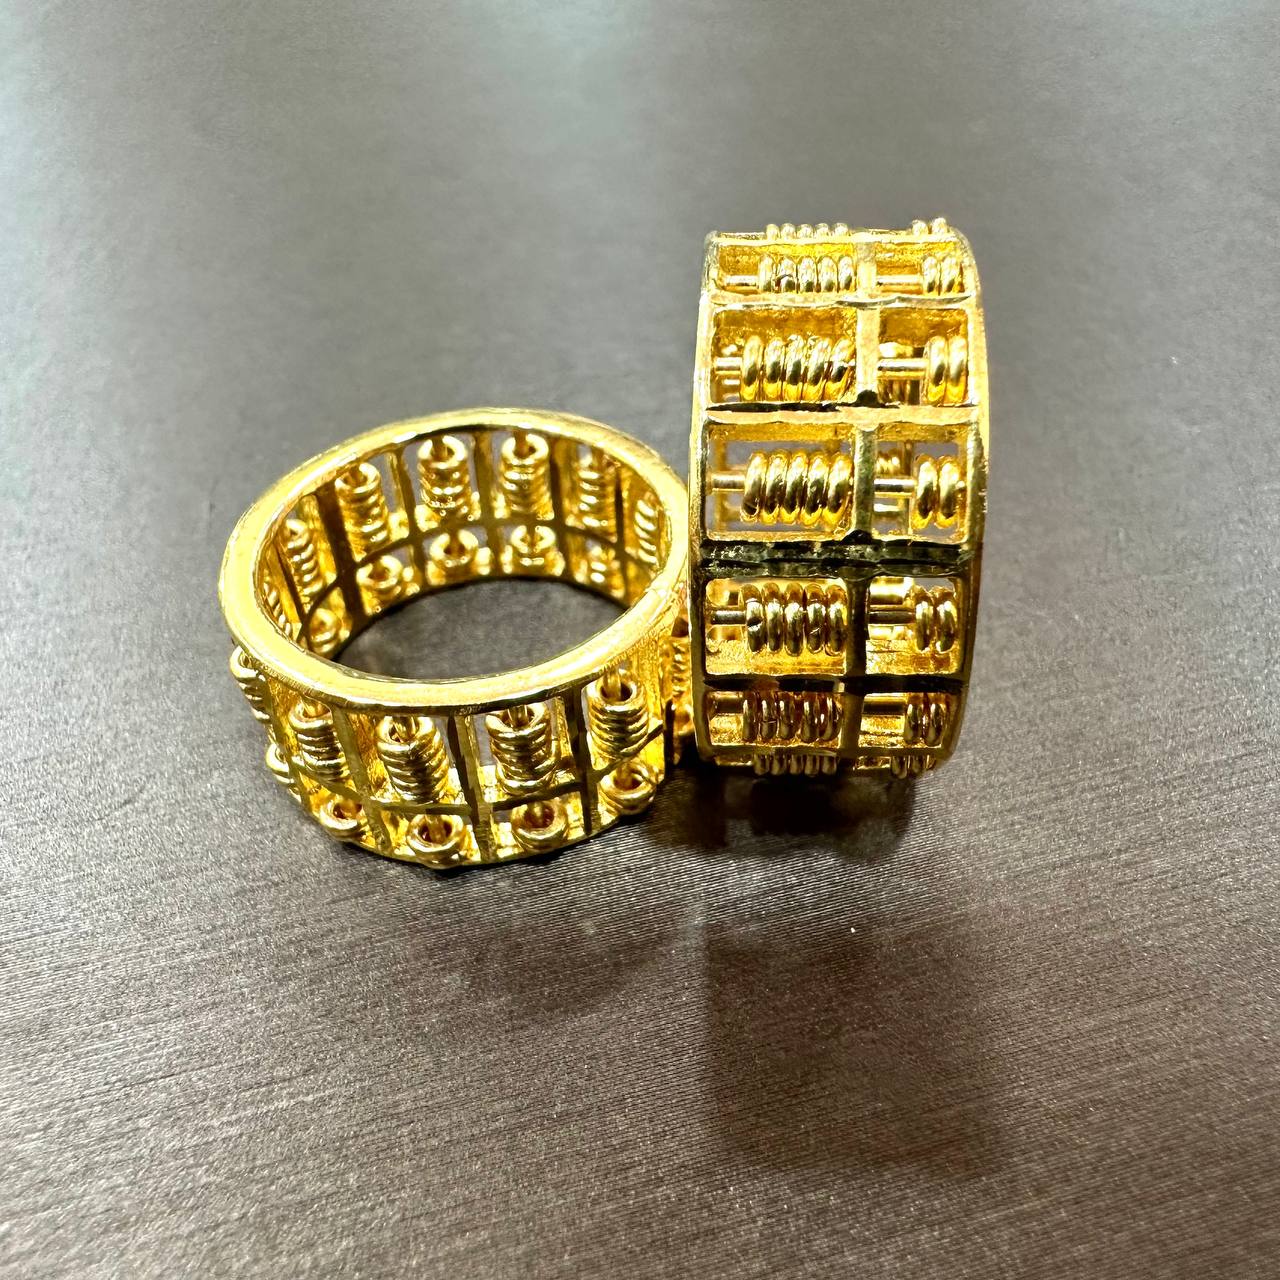 22k / 916 Gold Abacus Ring (Side Smooth Finish) V2-916 gold-Best Gold Shop